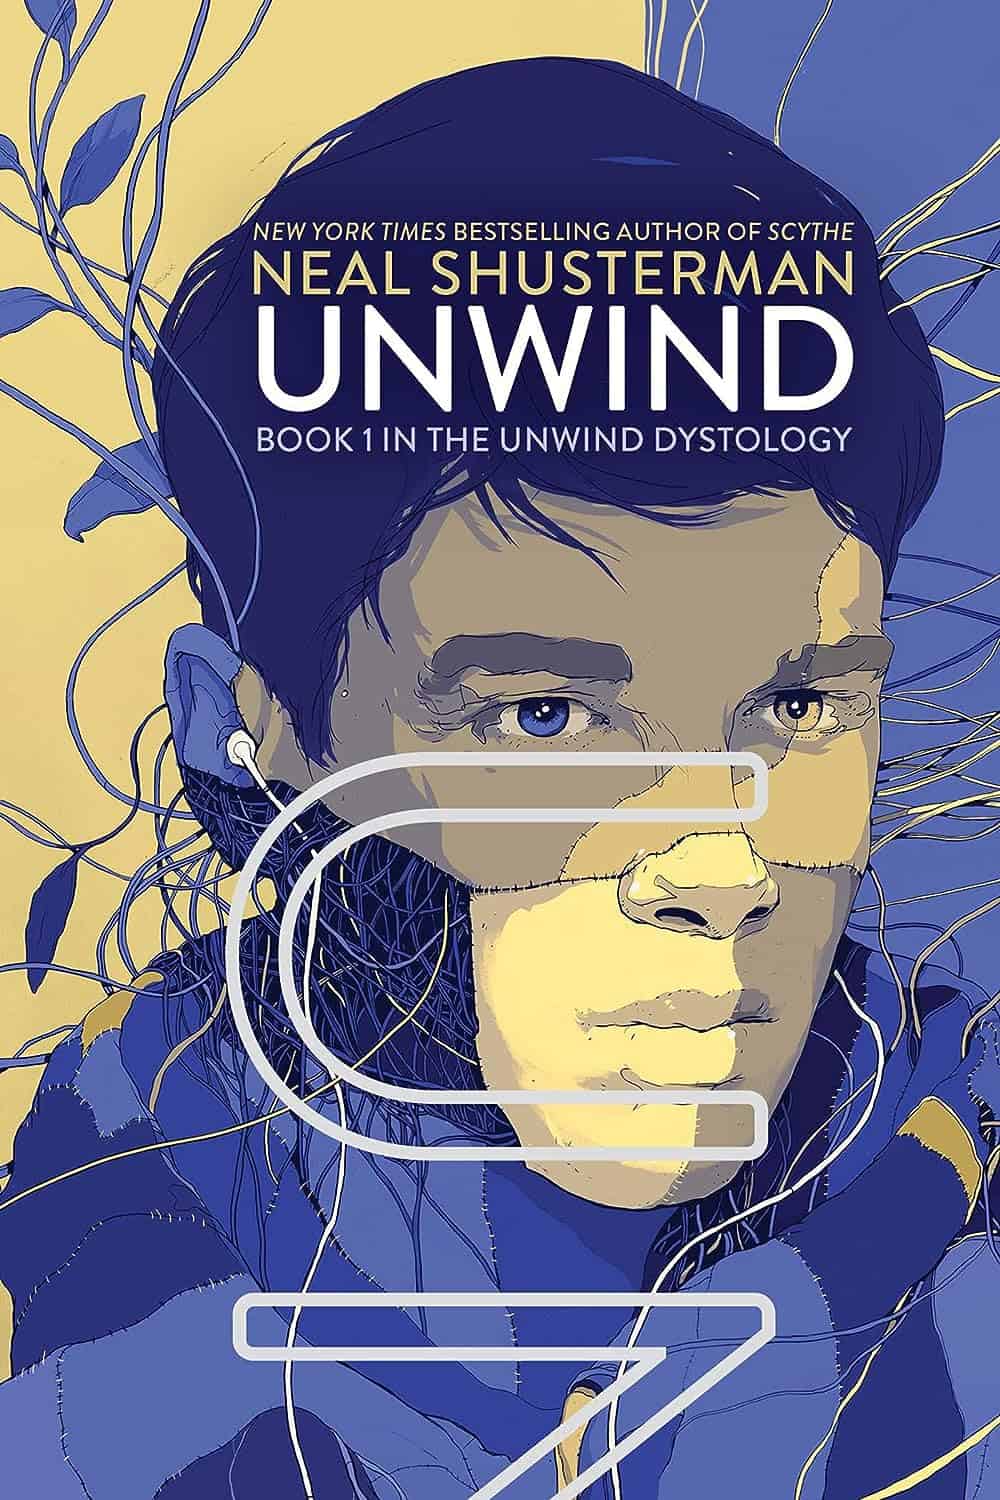 Unwind, by Neal Shusterman